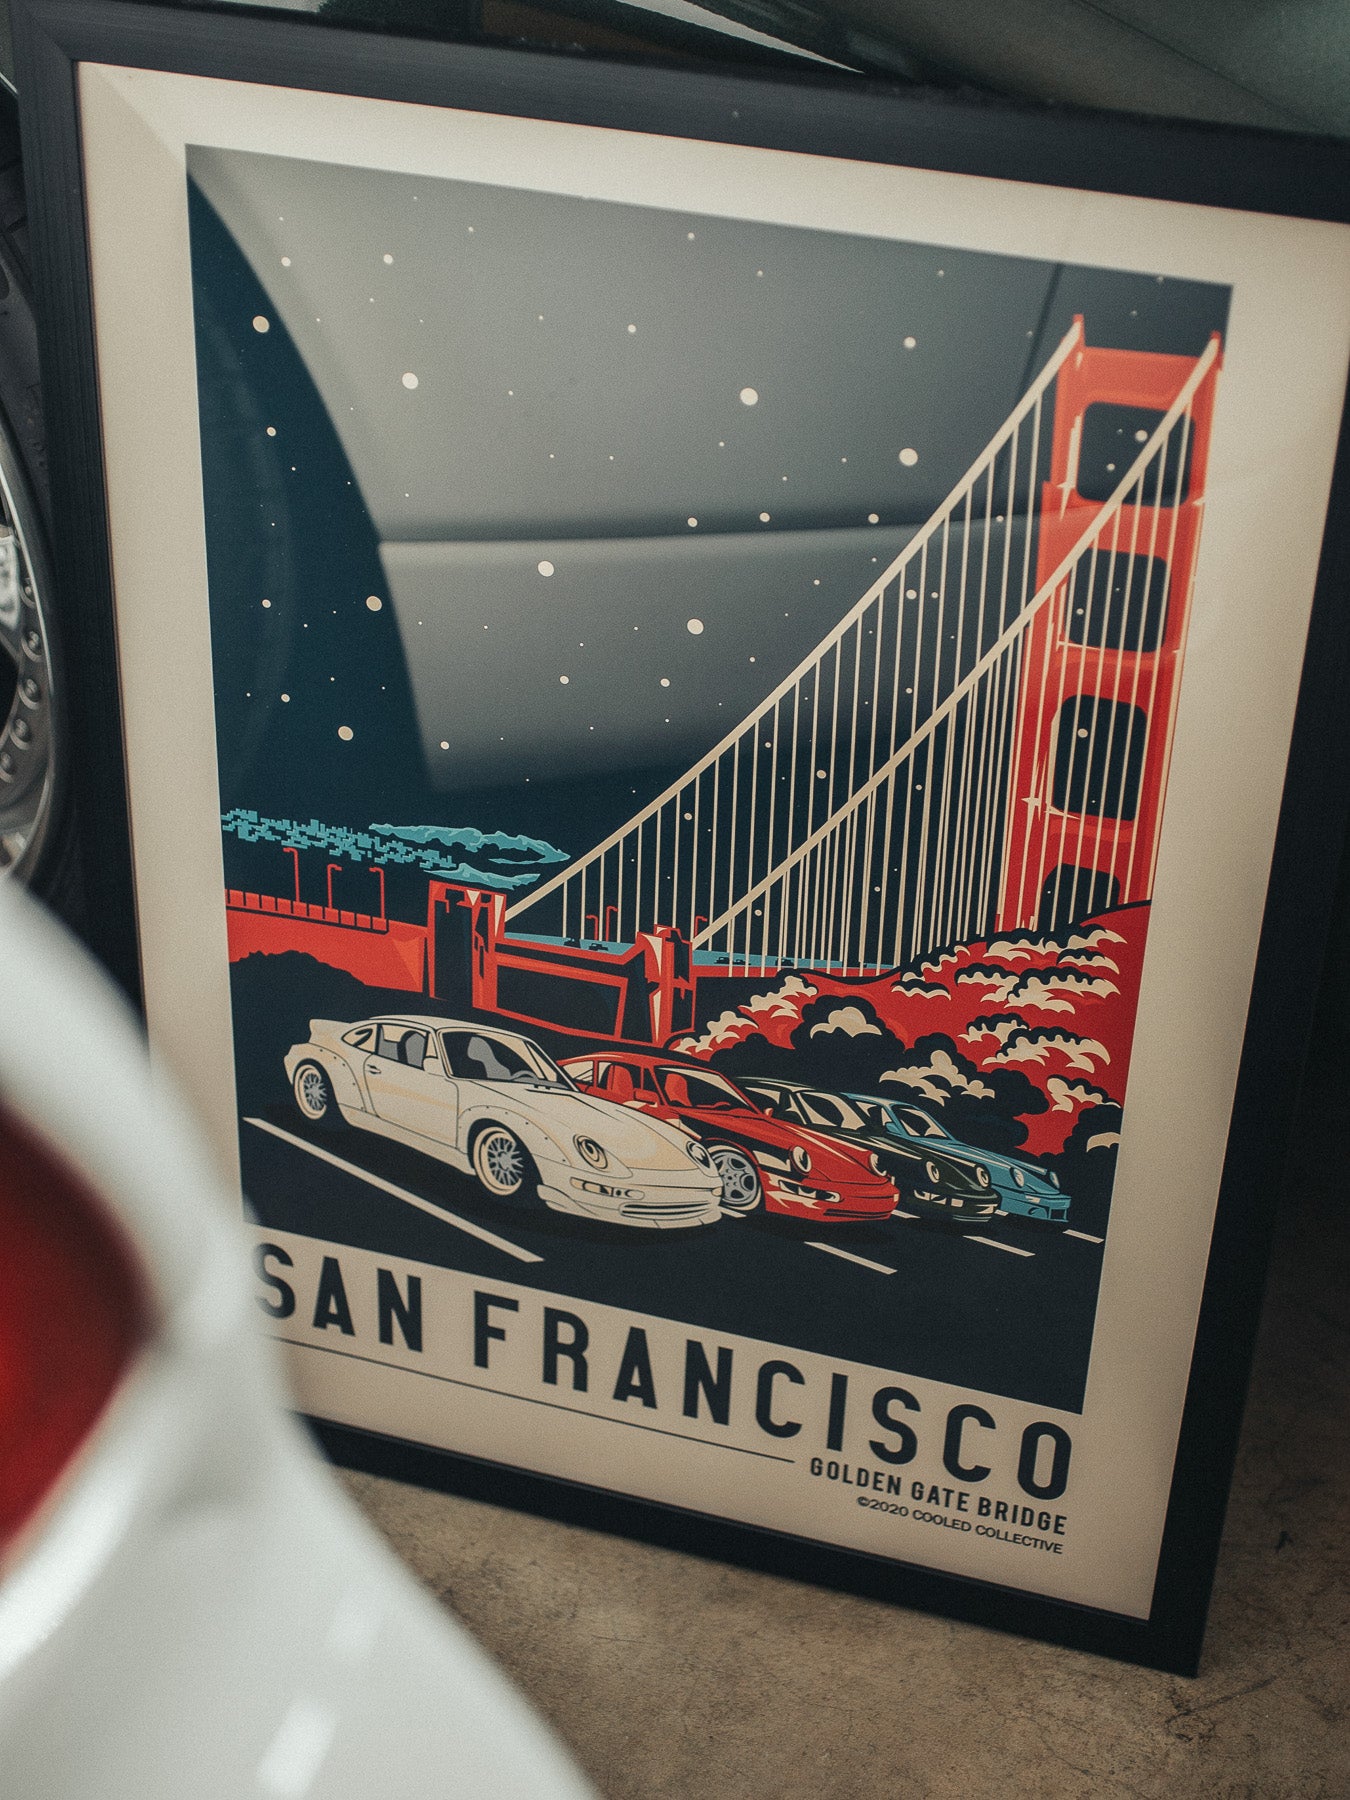 City of San Francisco - Golden Gate Bridge Poster